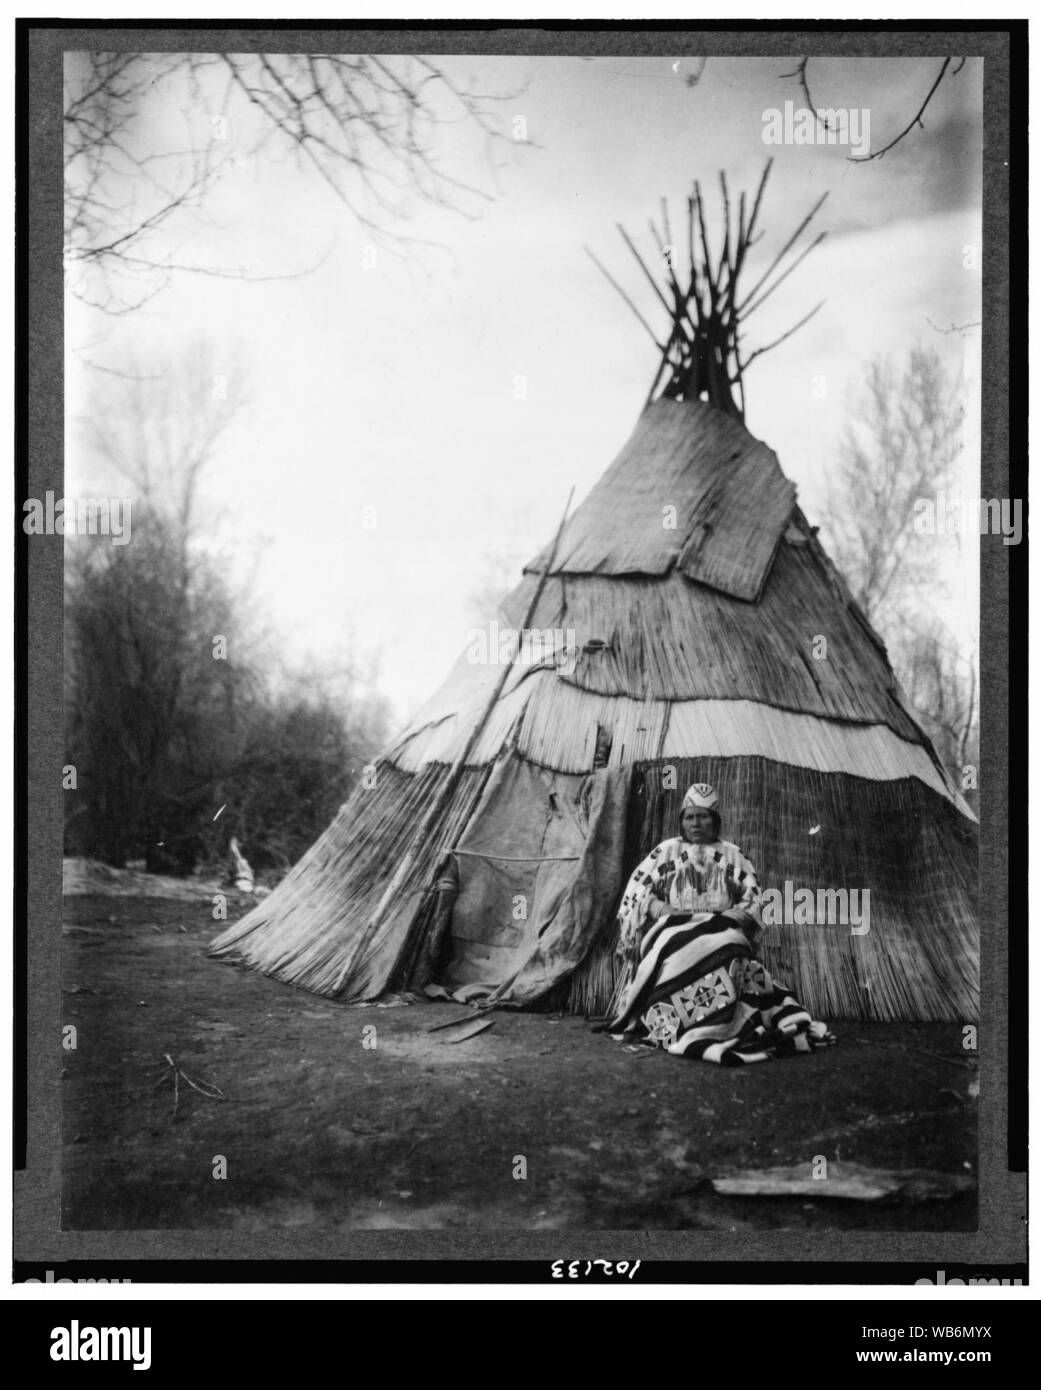 Дом индейца 6. Жилище индейцев племени Сиу. Вигвам индейцев Северной Америки. Типи жилище индейцев. Индейцы Сиу типи.